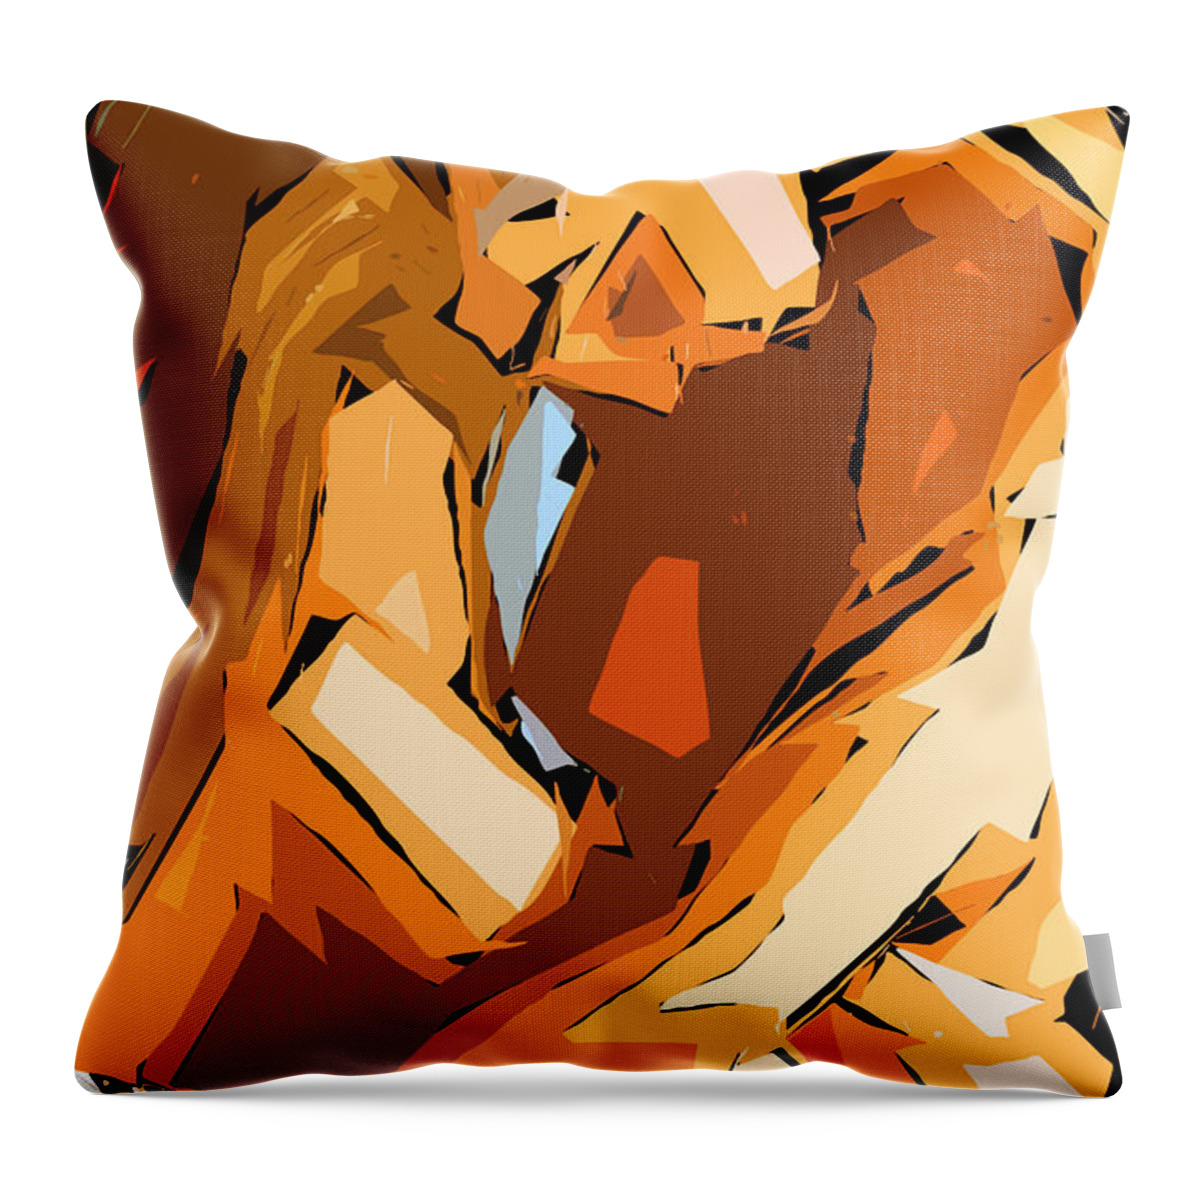 Female Throw Pillow featuring the digital art Cubism Series IX by Rafael Salazar